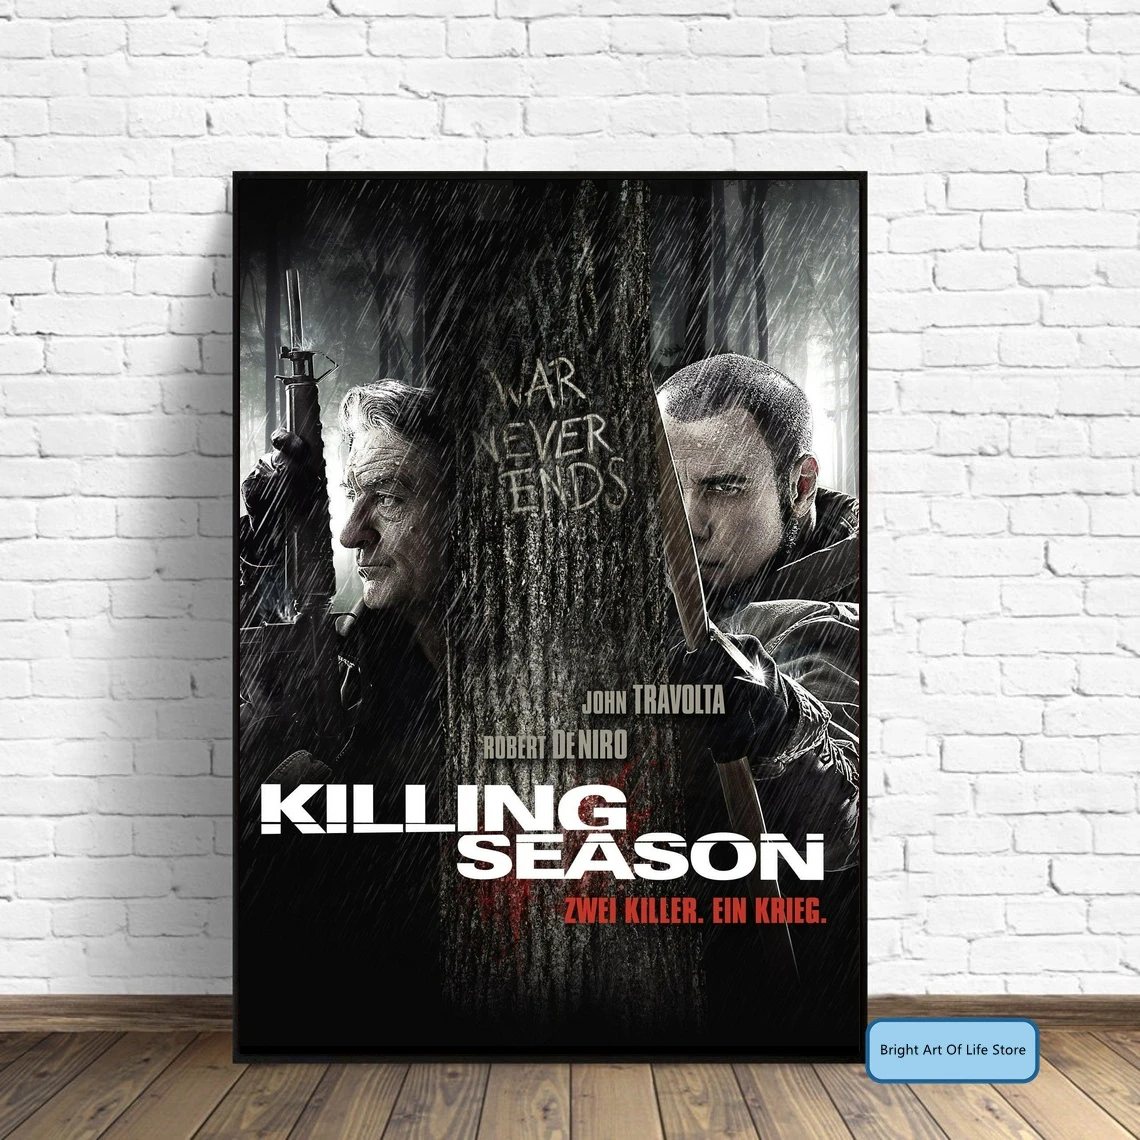 Killing Season (2013) Poster Film Cover Photo Print Canvas Wall Art Decor Acasă (Fara Rama)2